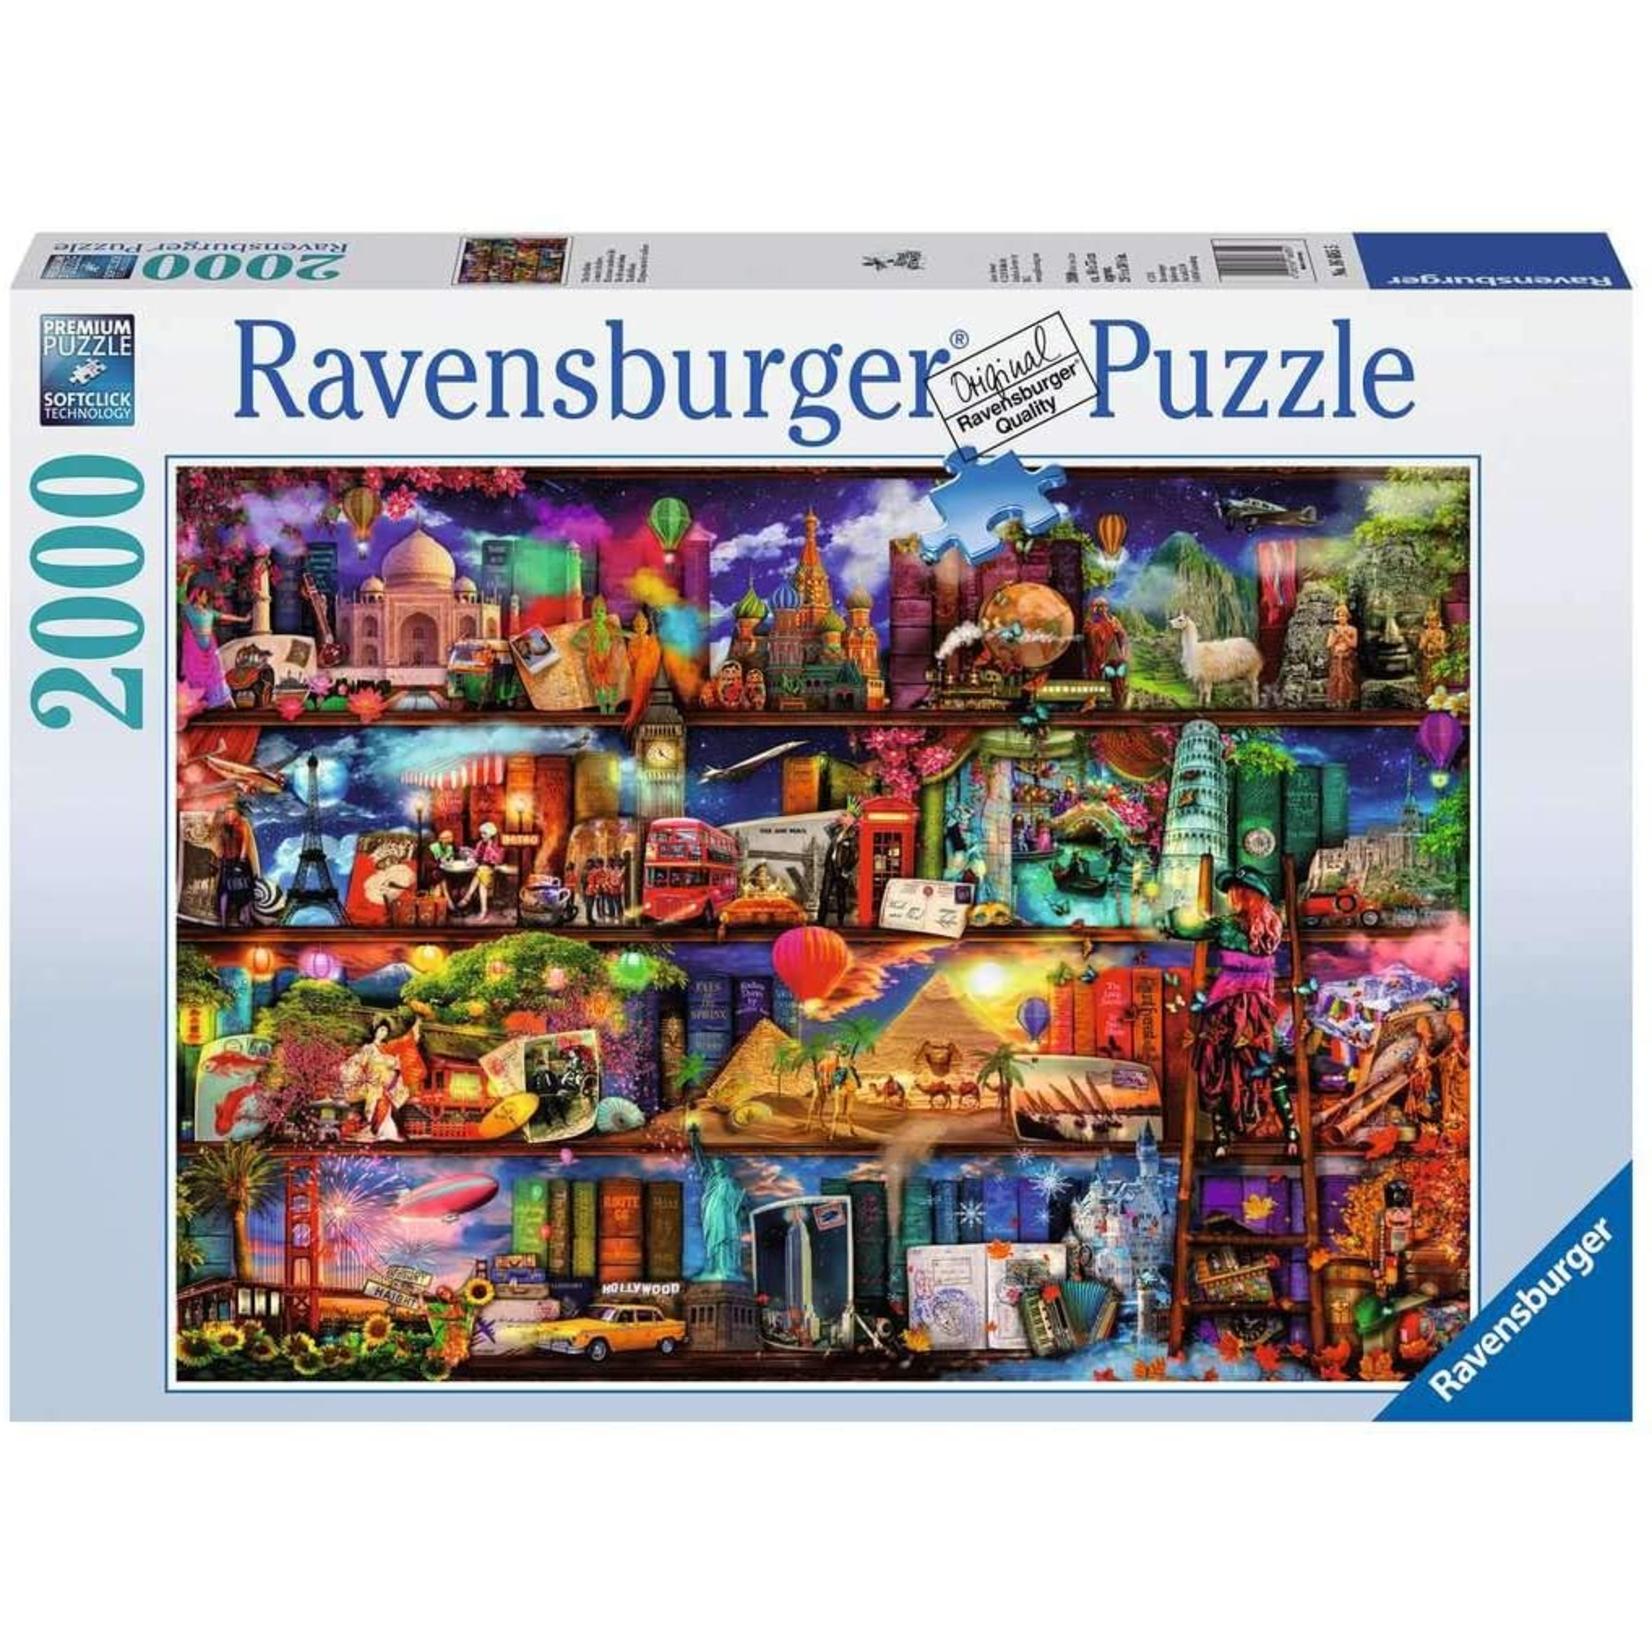 Ravensburger Puzzle - 2000 Pieces - Gardners Paradise